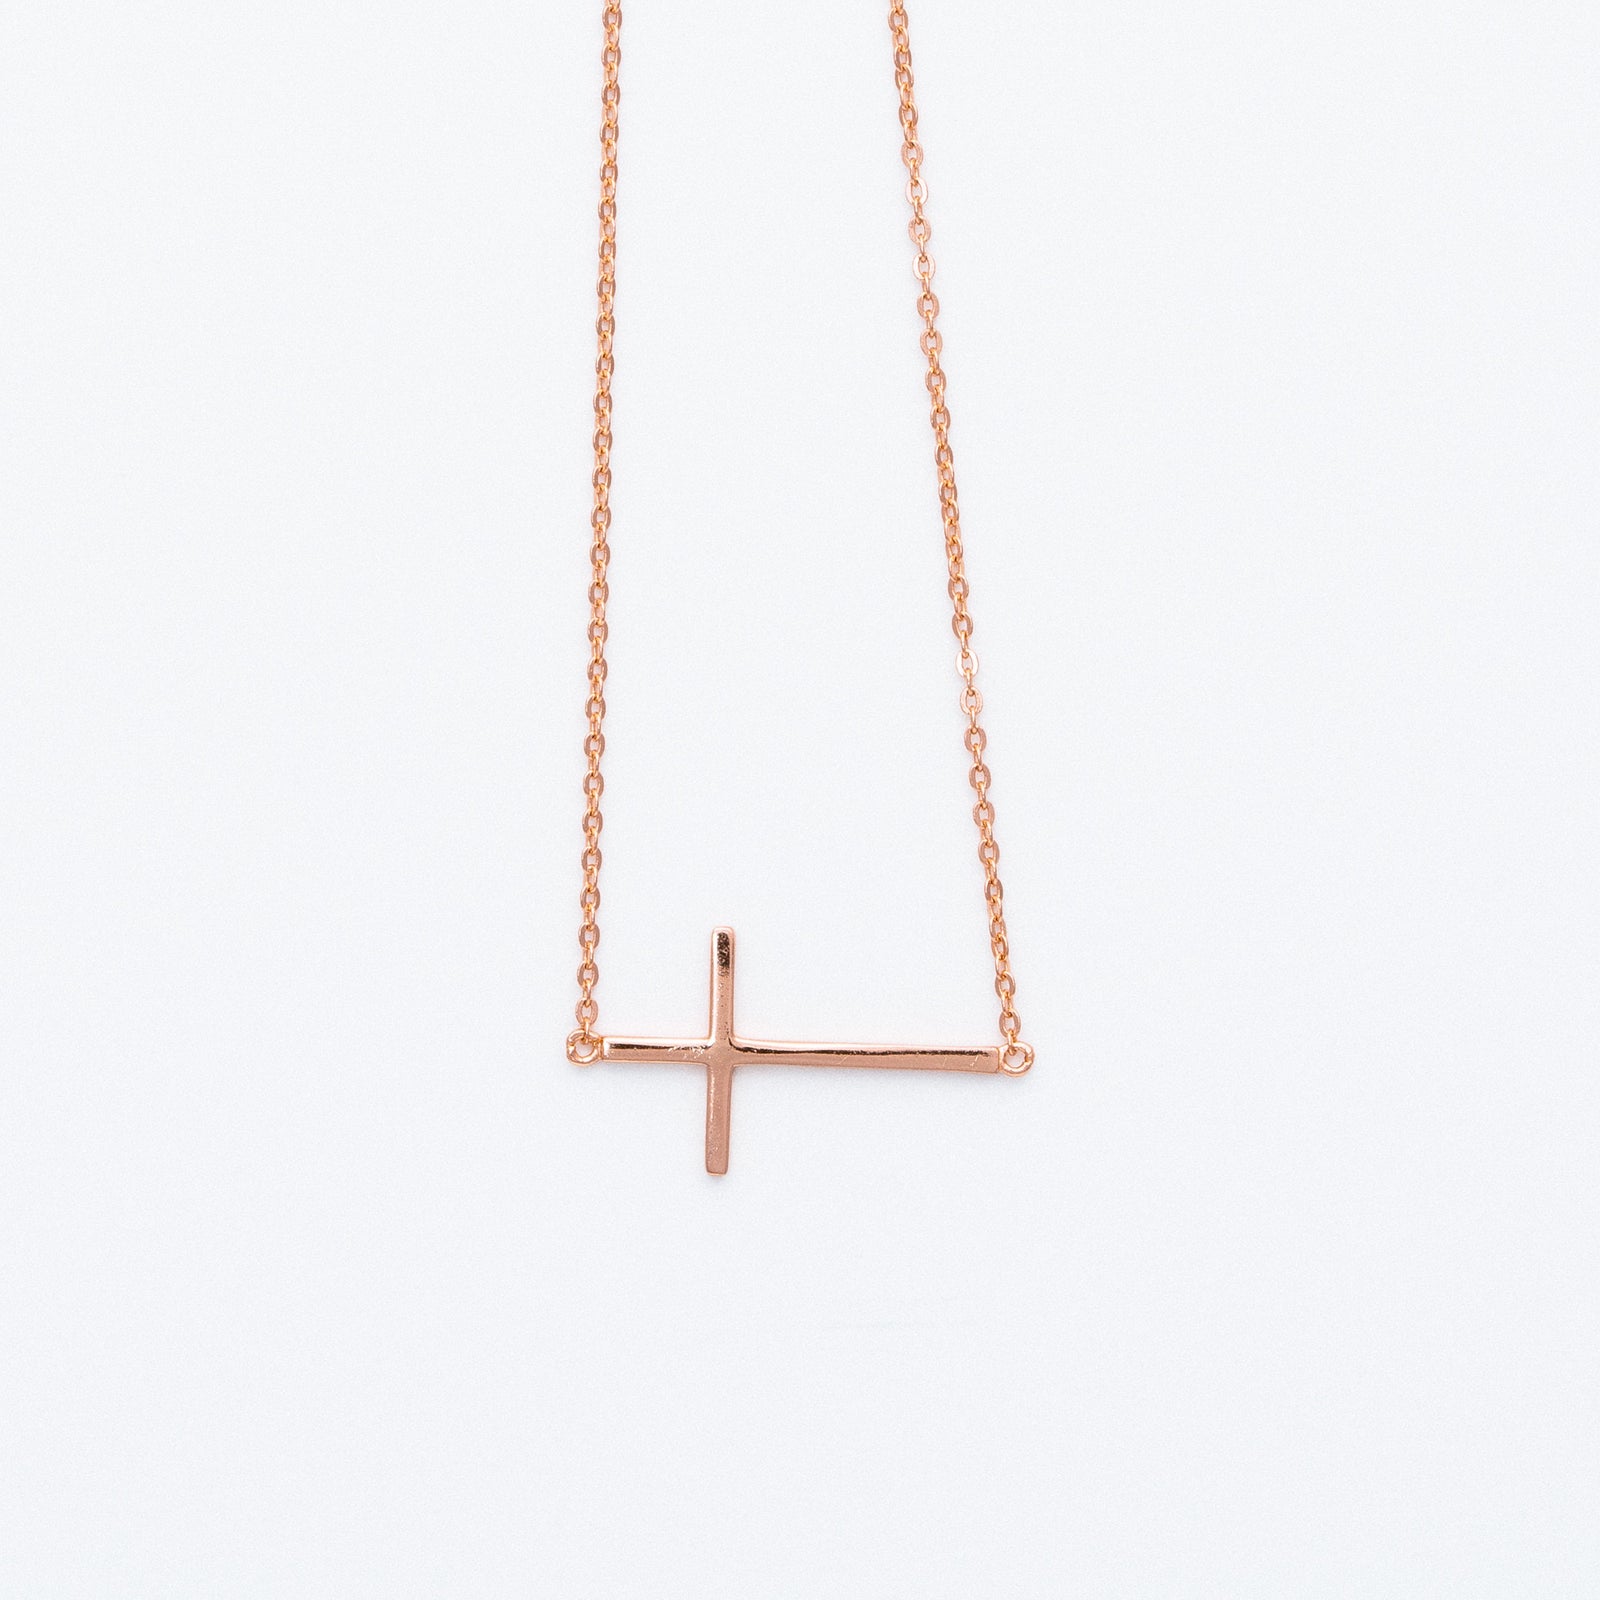 Petite 14k Rose Gold Vermeil Sideways Cross Necklace - Sid… | Flickr